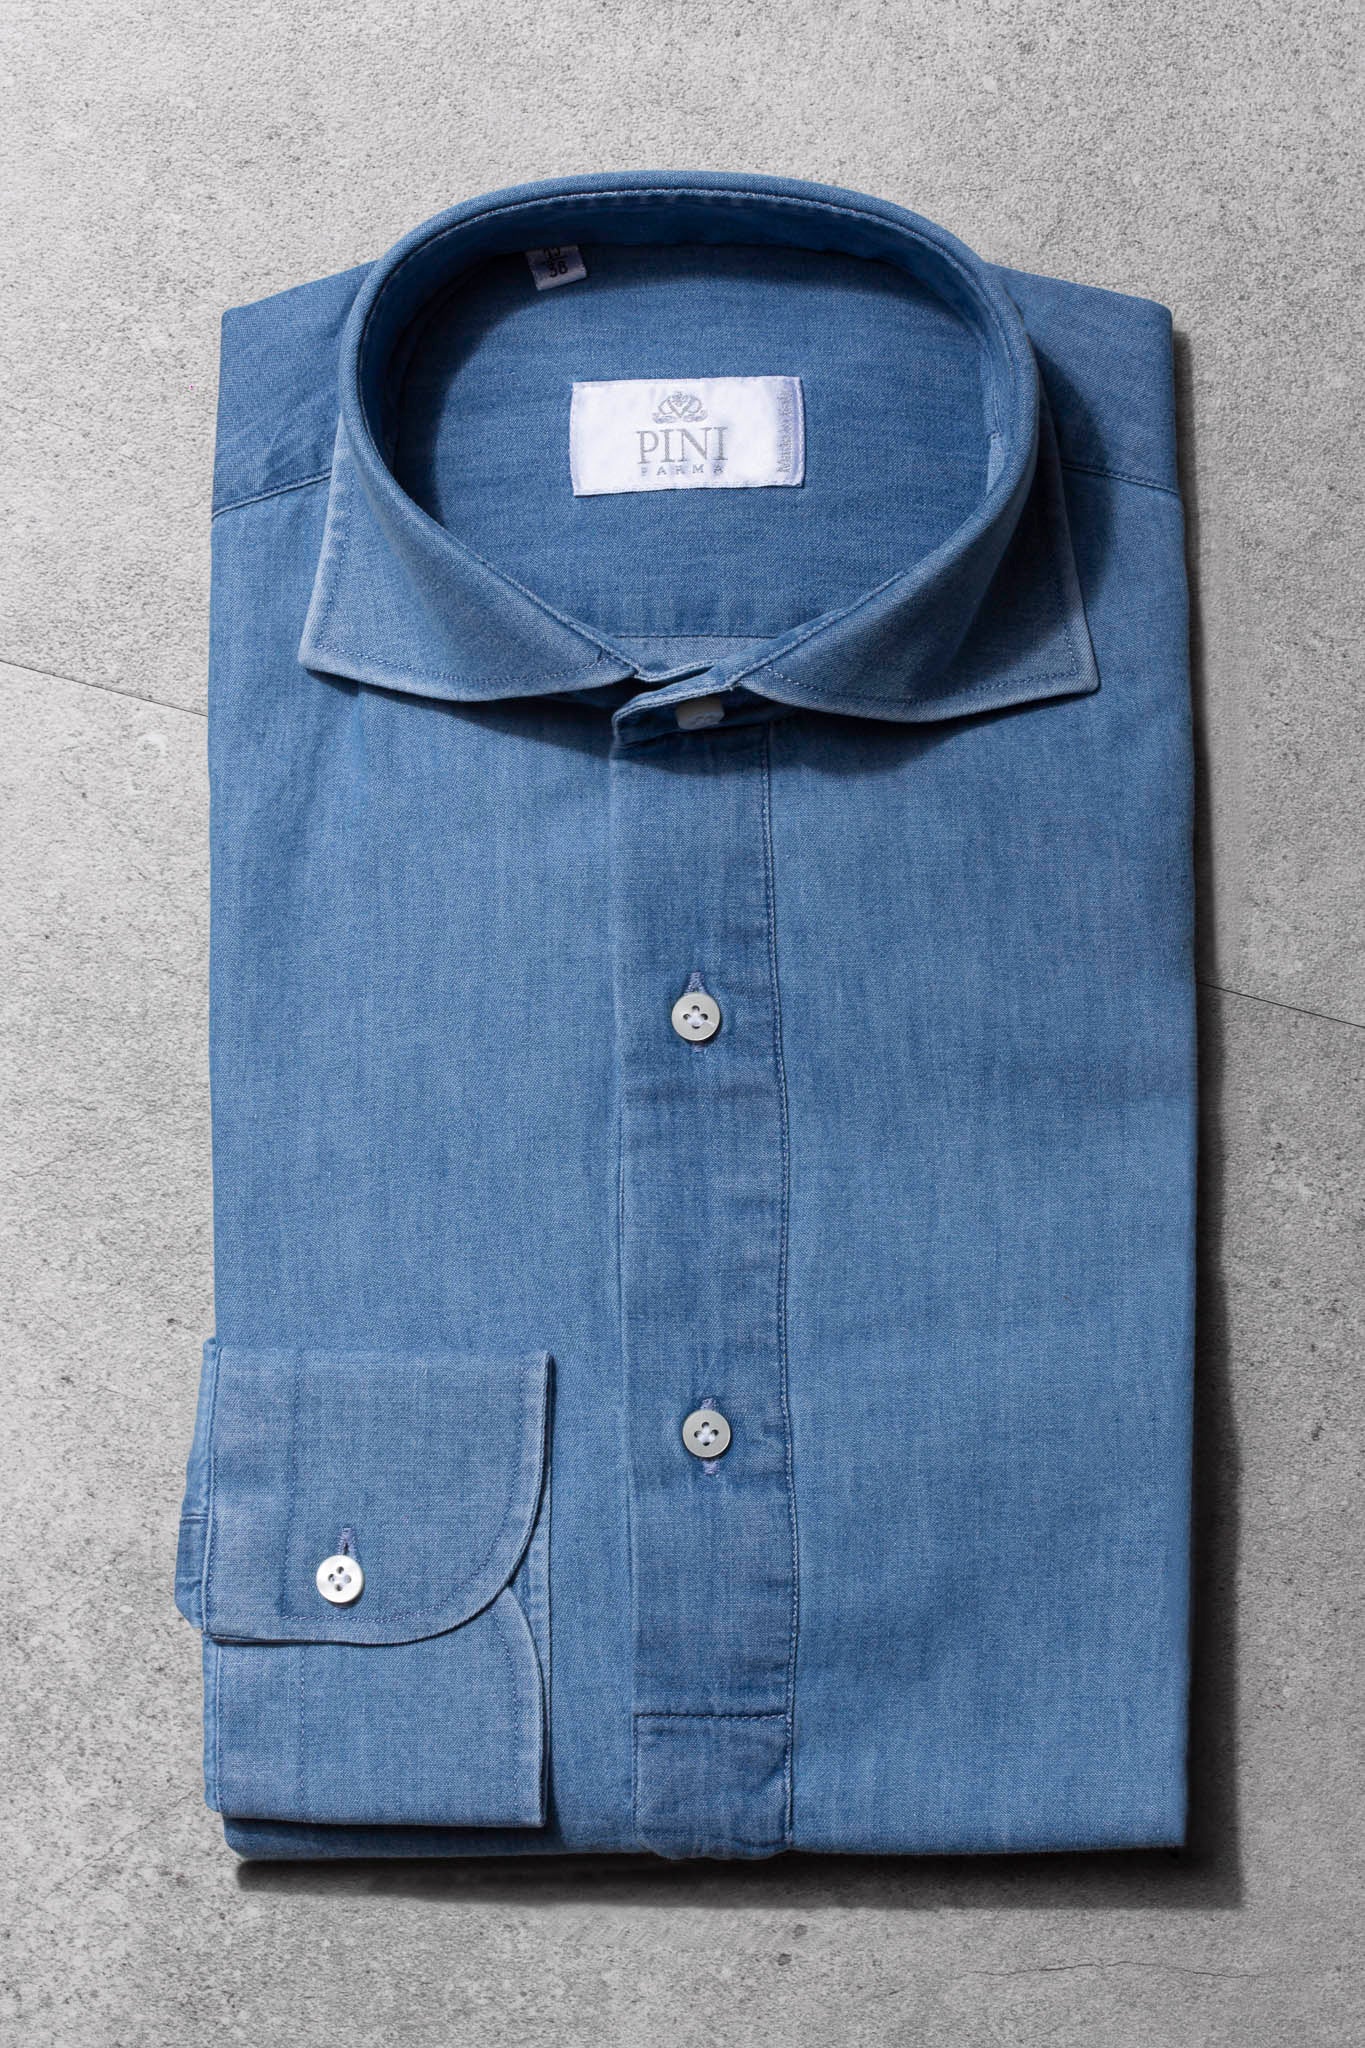 Light blue denim popover shirt - Made in Italy